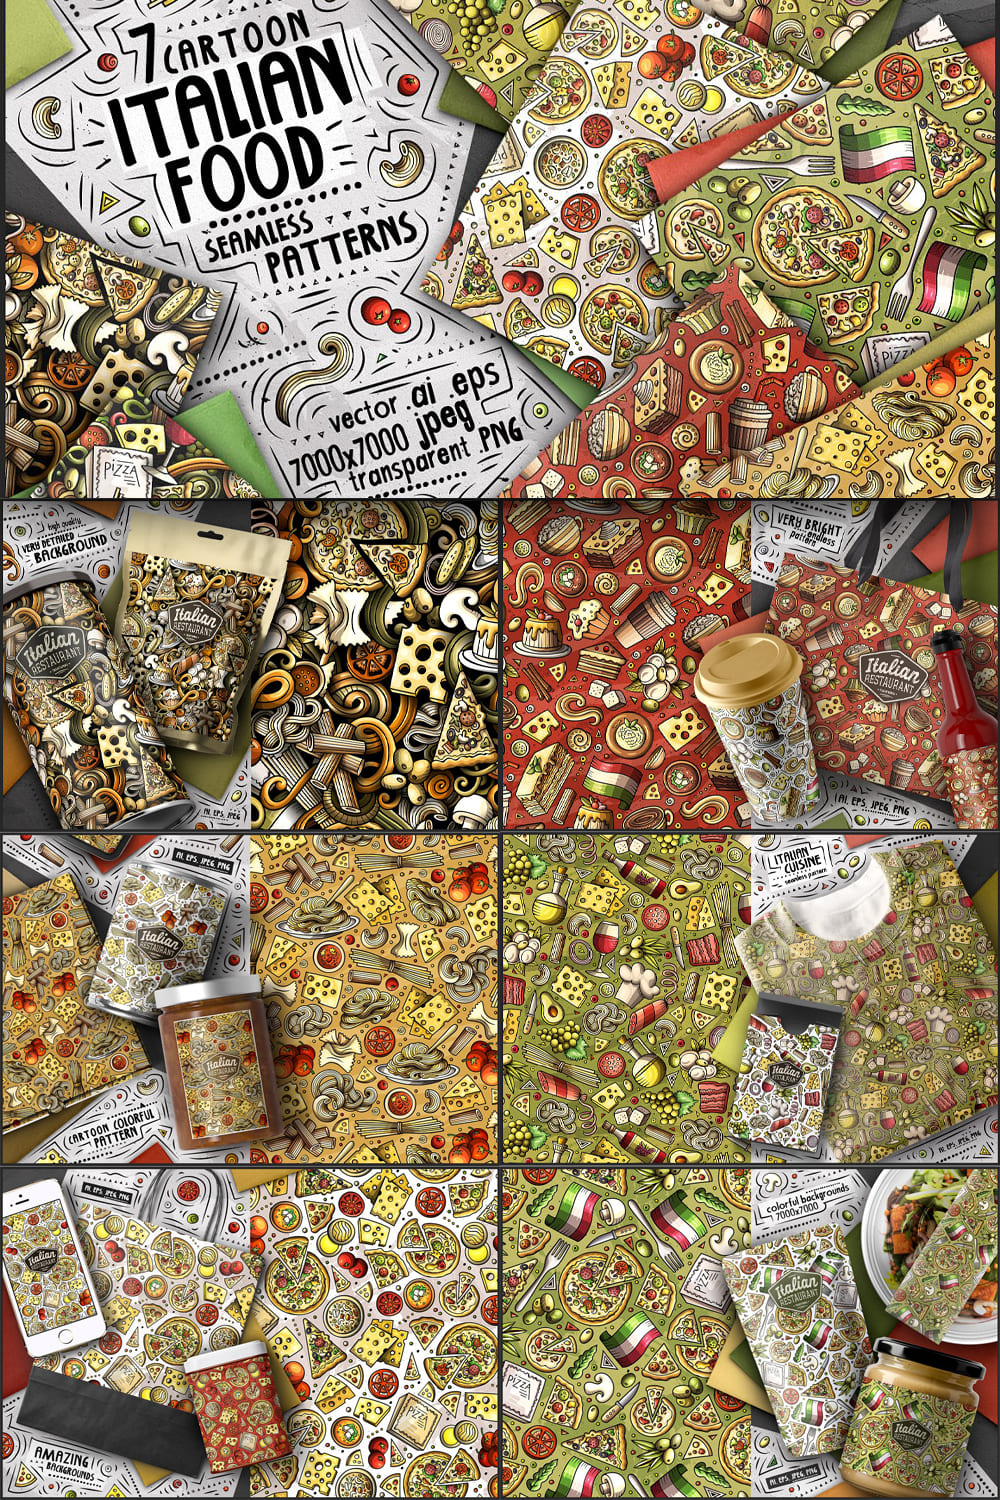 7 Italian Food Seamless Patterns Pinterest 1000 1500.